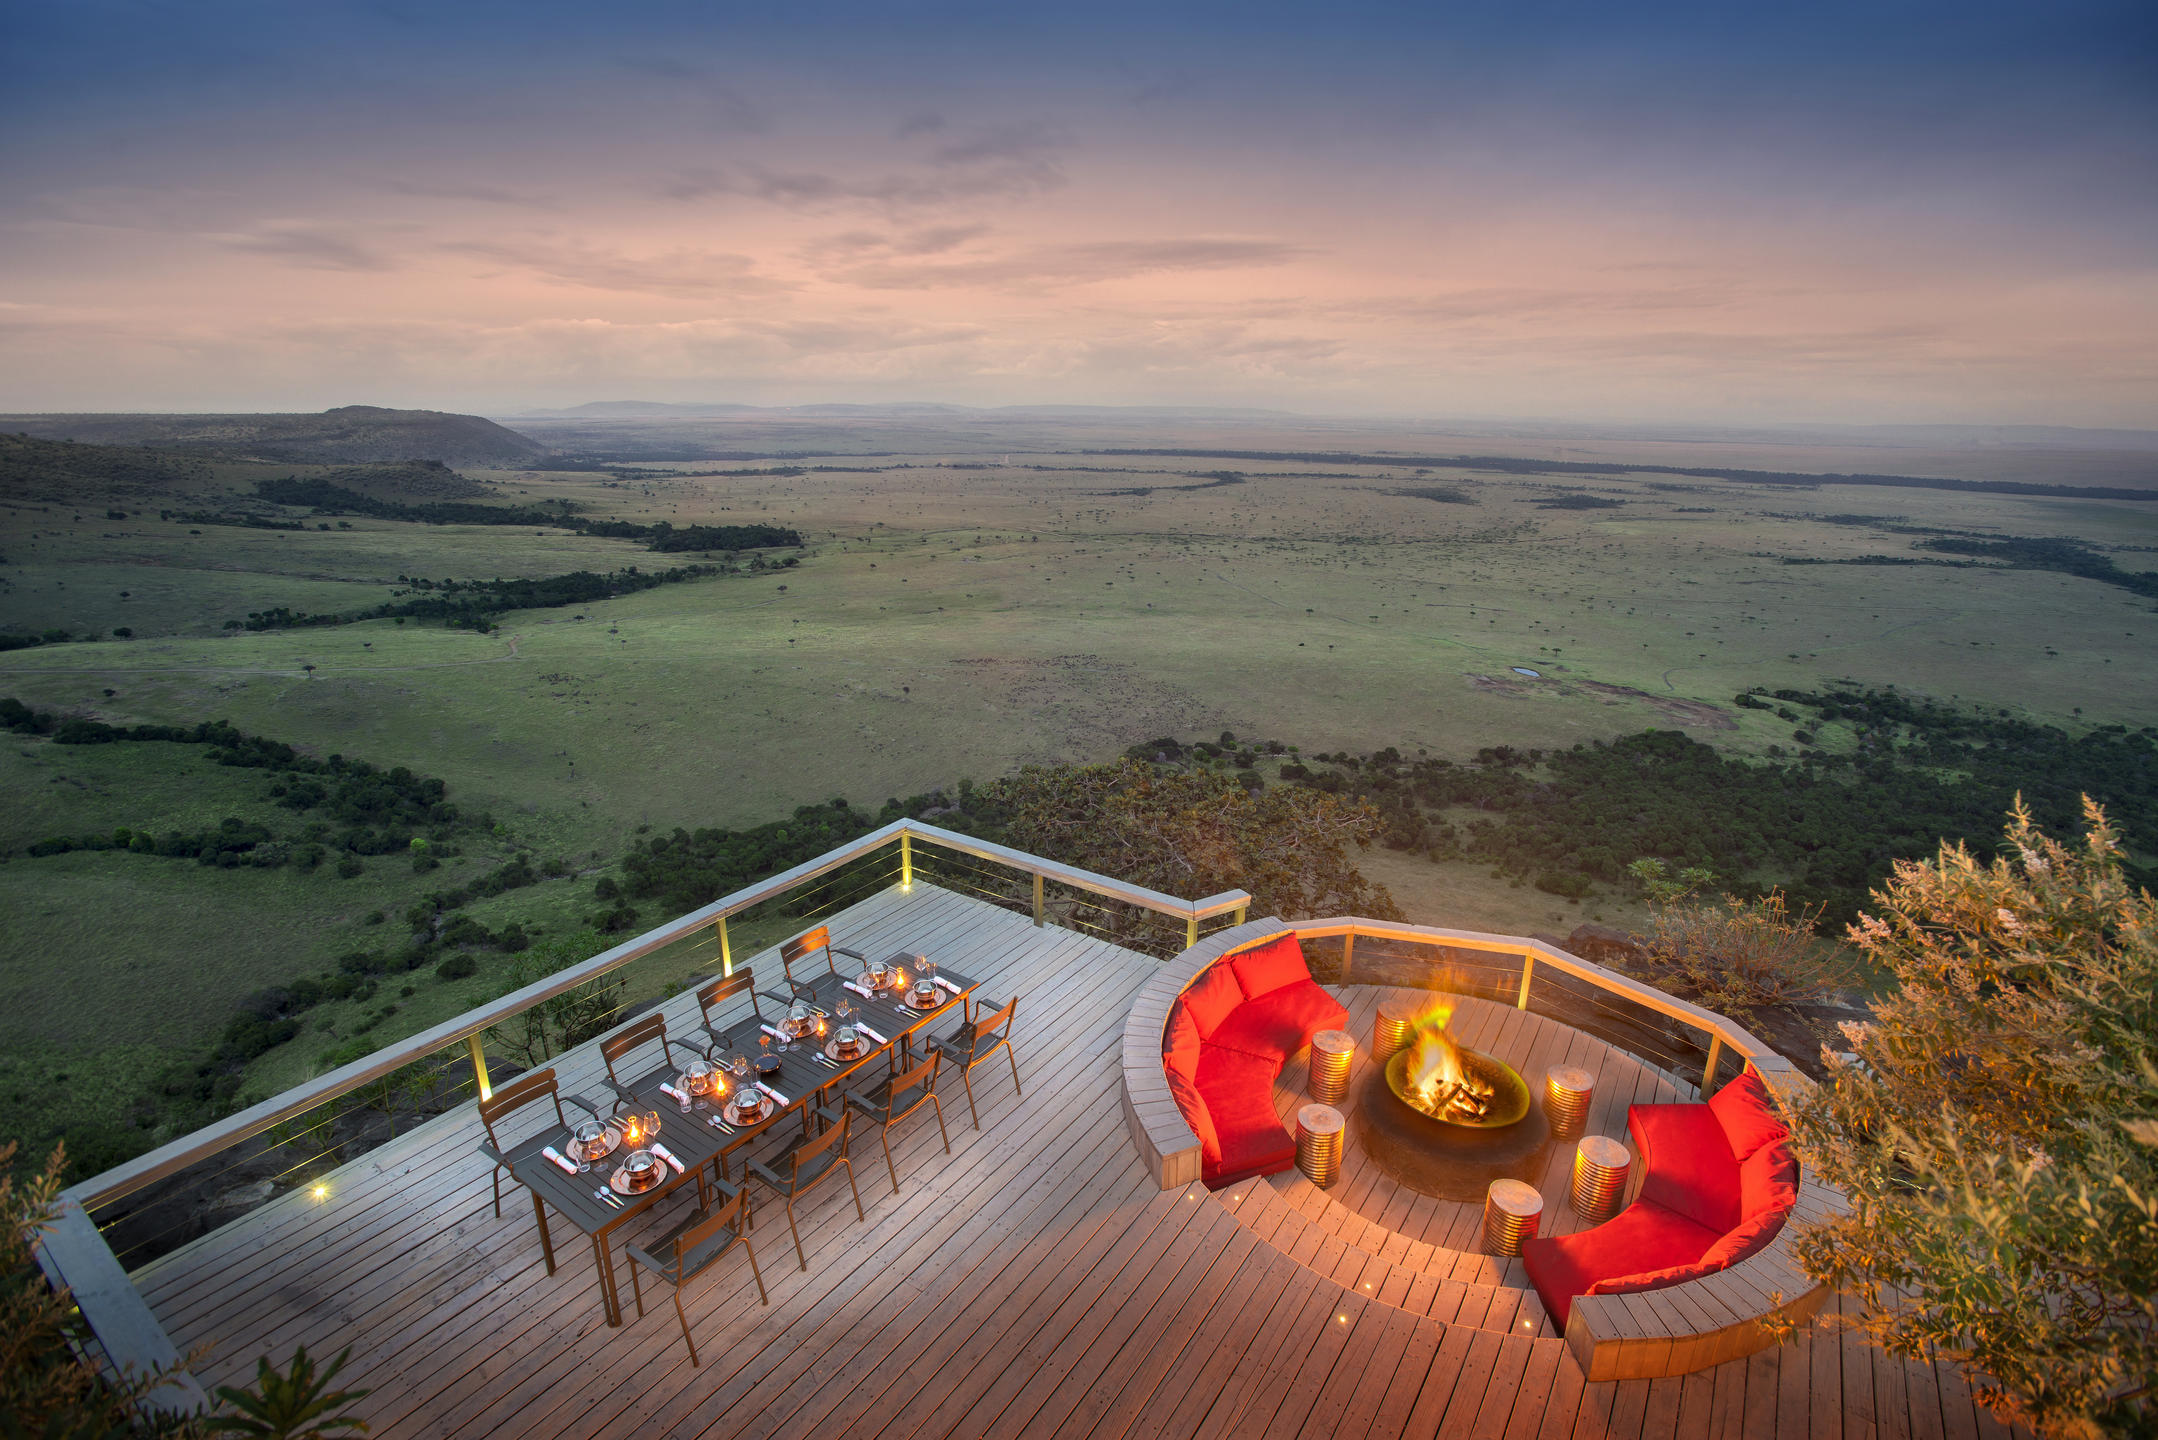 A view across the plains of the Masai Mara from Angama Mara, Masai Mara, Kenya